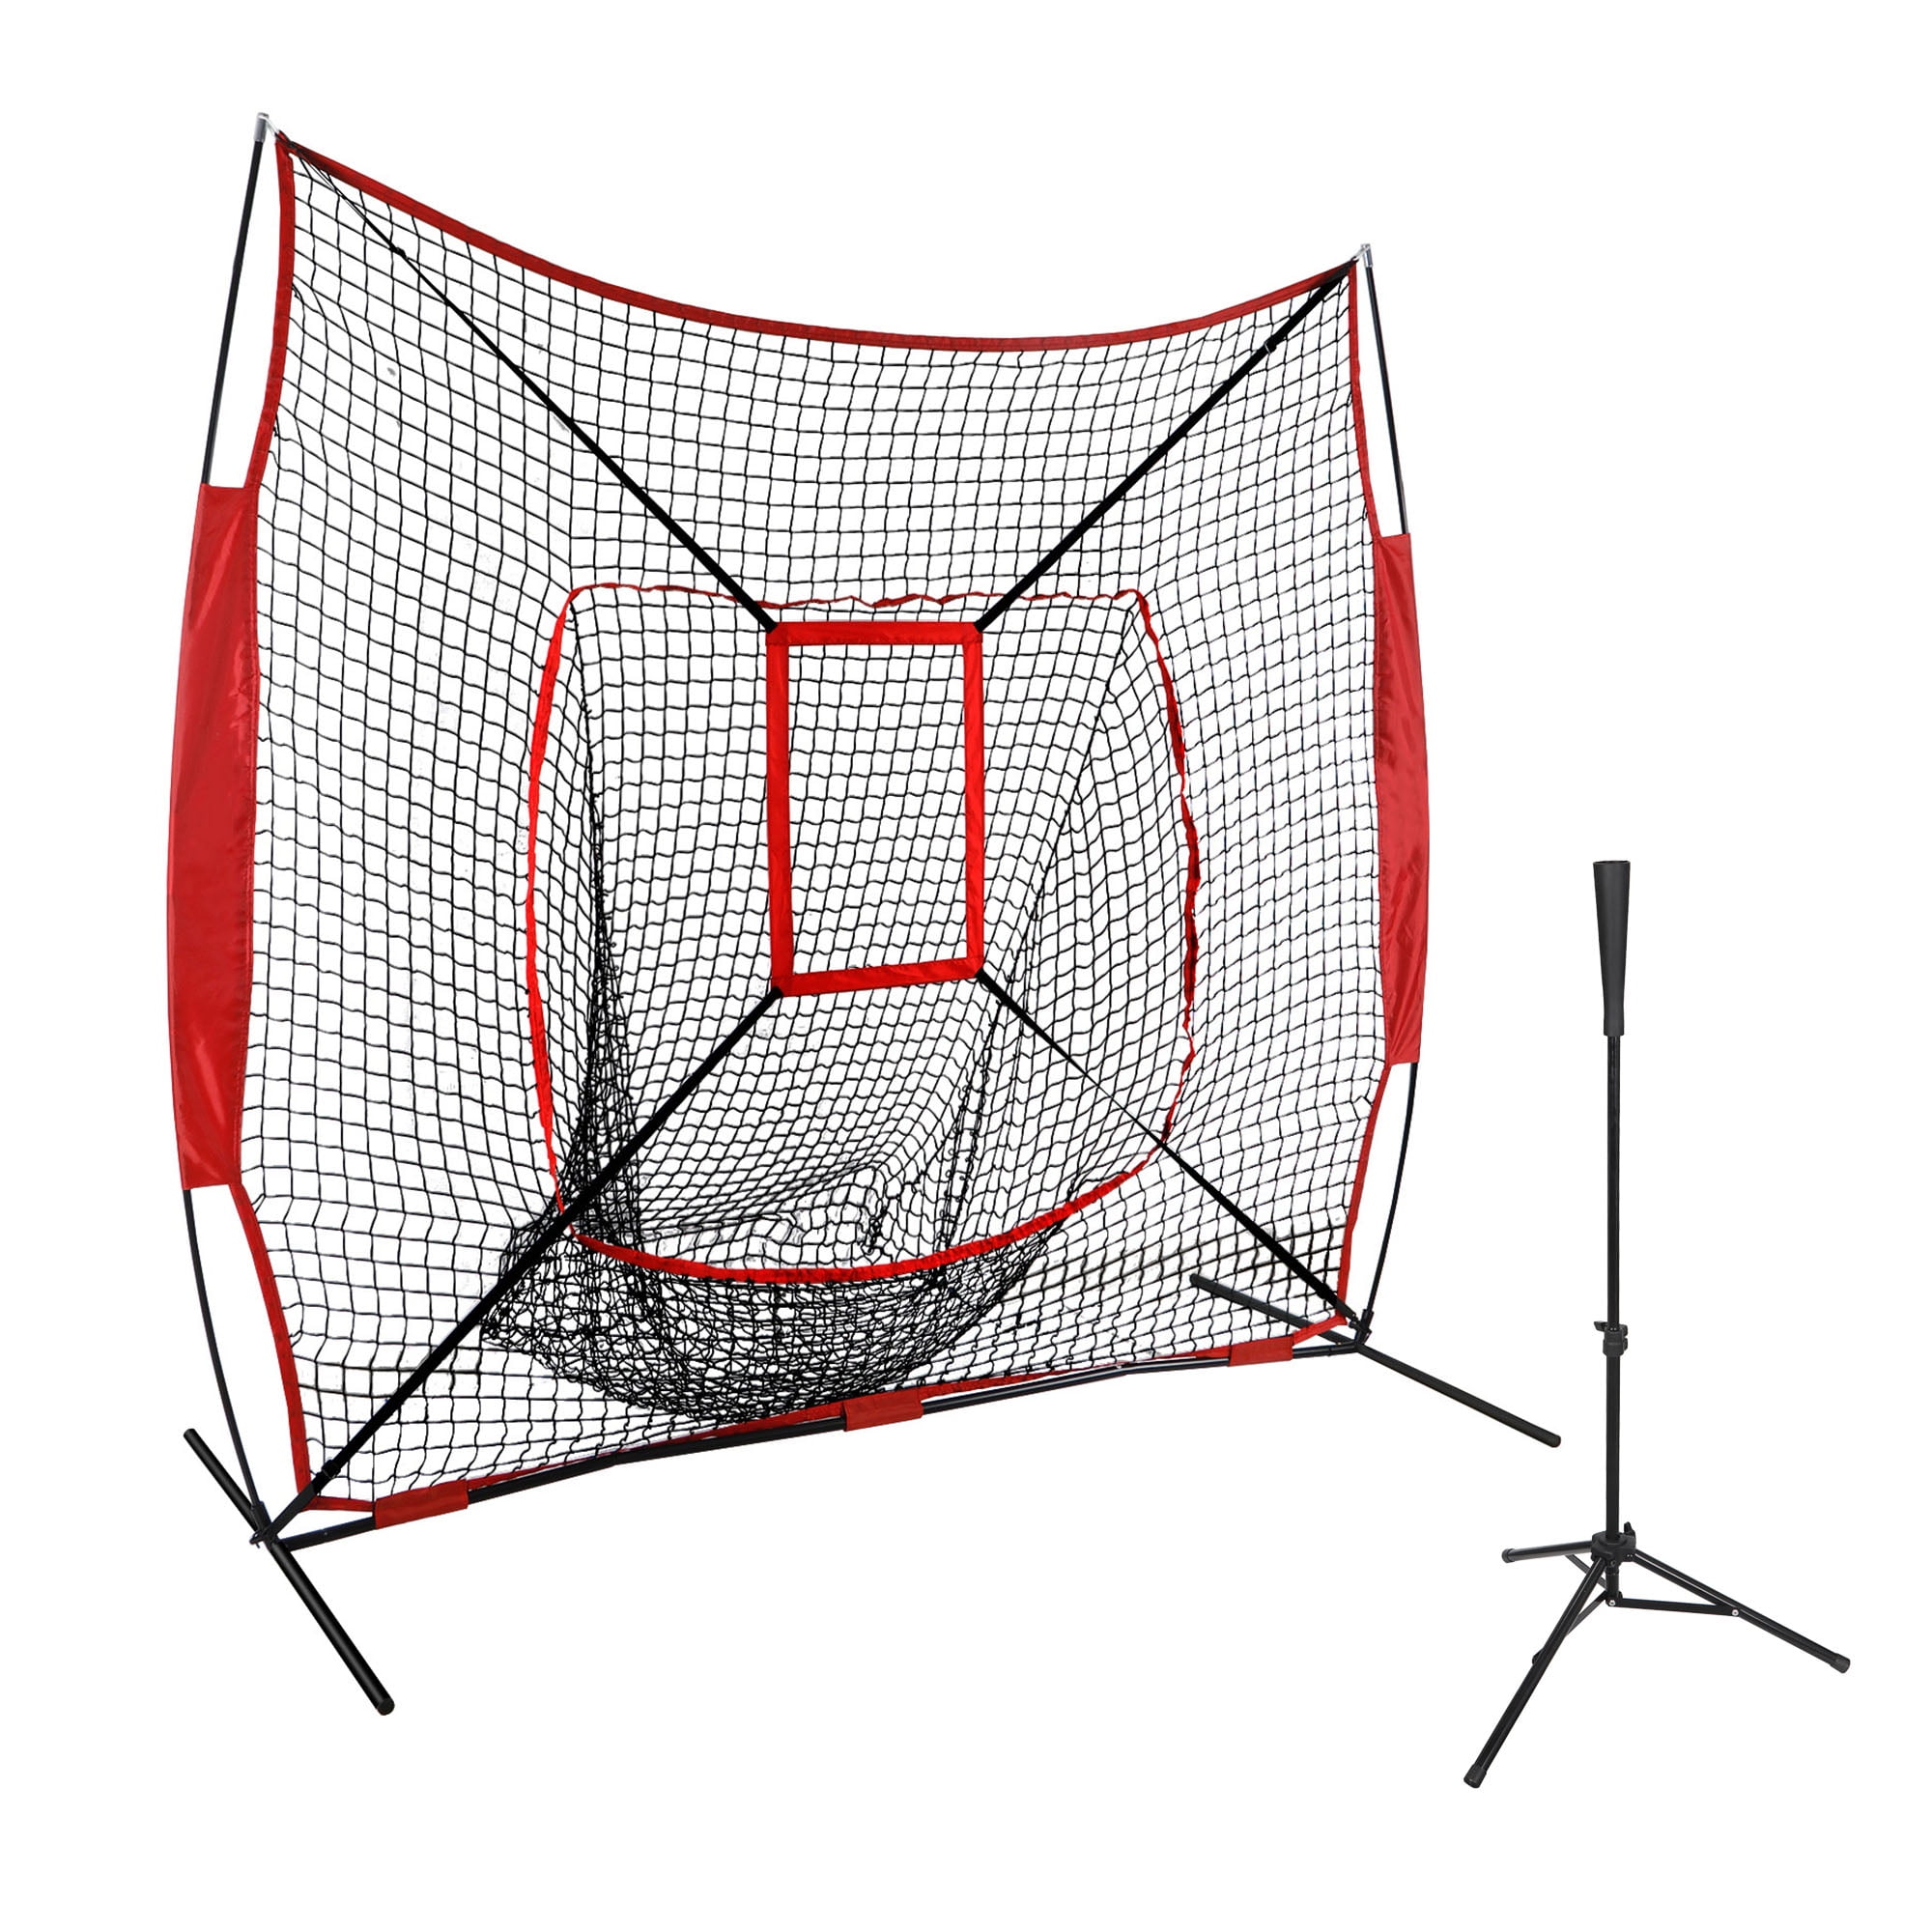 Pro-Style Batting Tee 7'×7' Baseball Softball Practice Net w/Bag & Bow Frame 